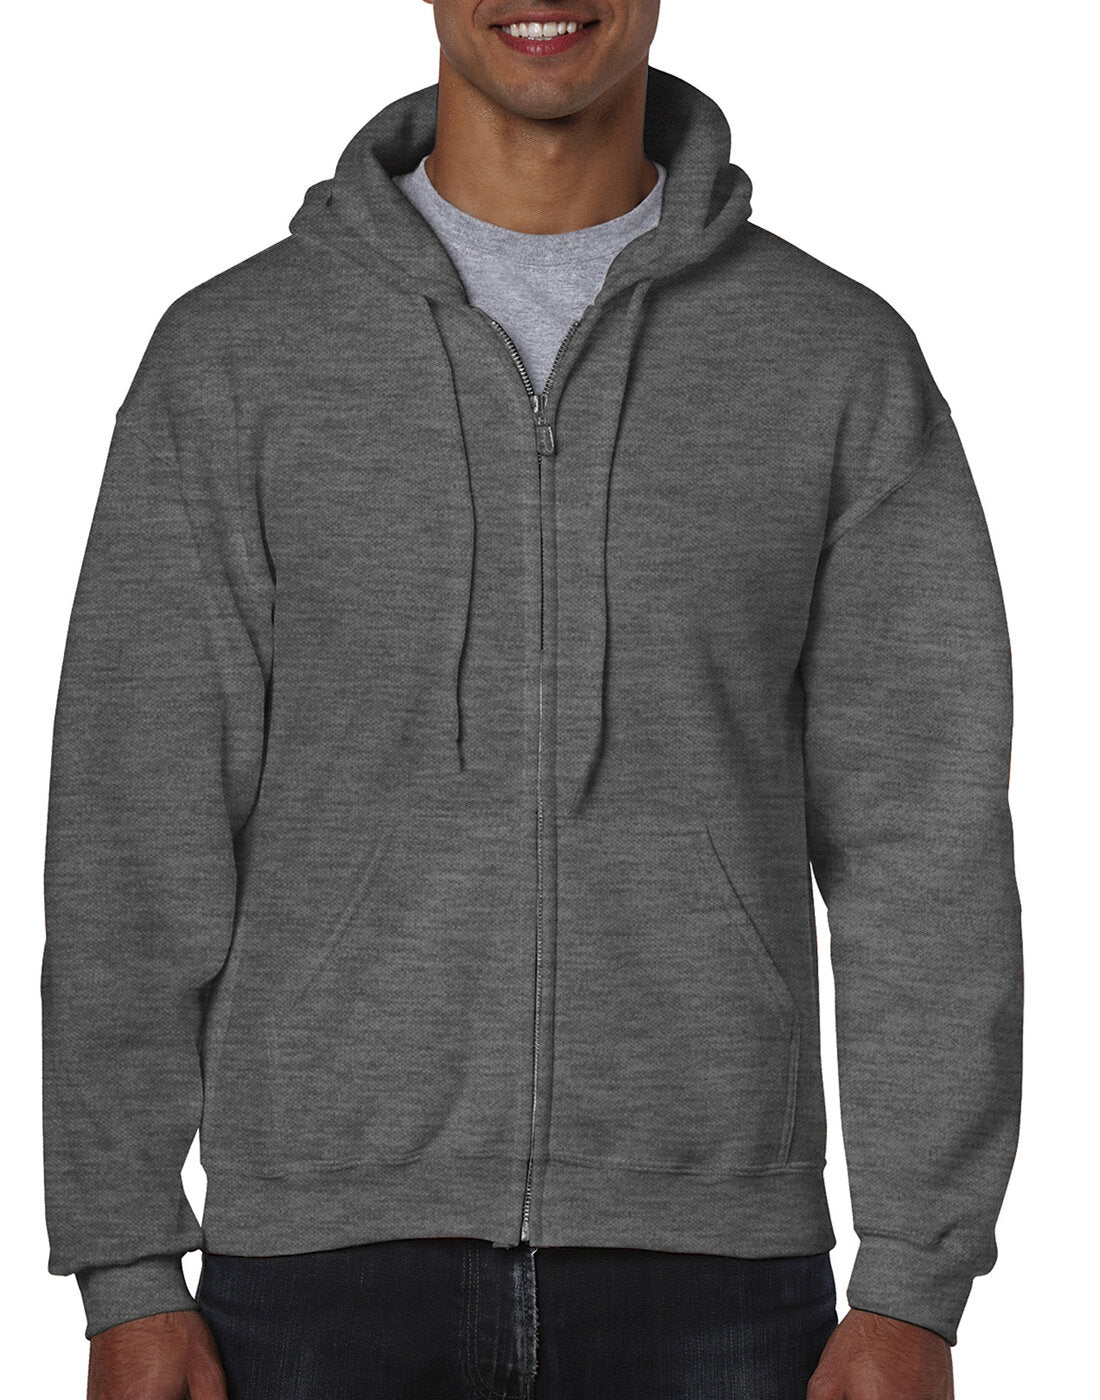 Gildan Adult Heavy Blend Full Zip Hooded Sweatshirt - Dark heather